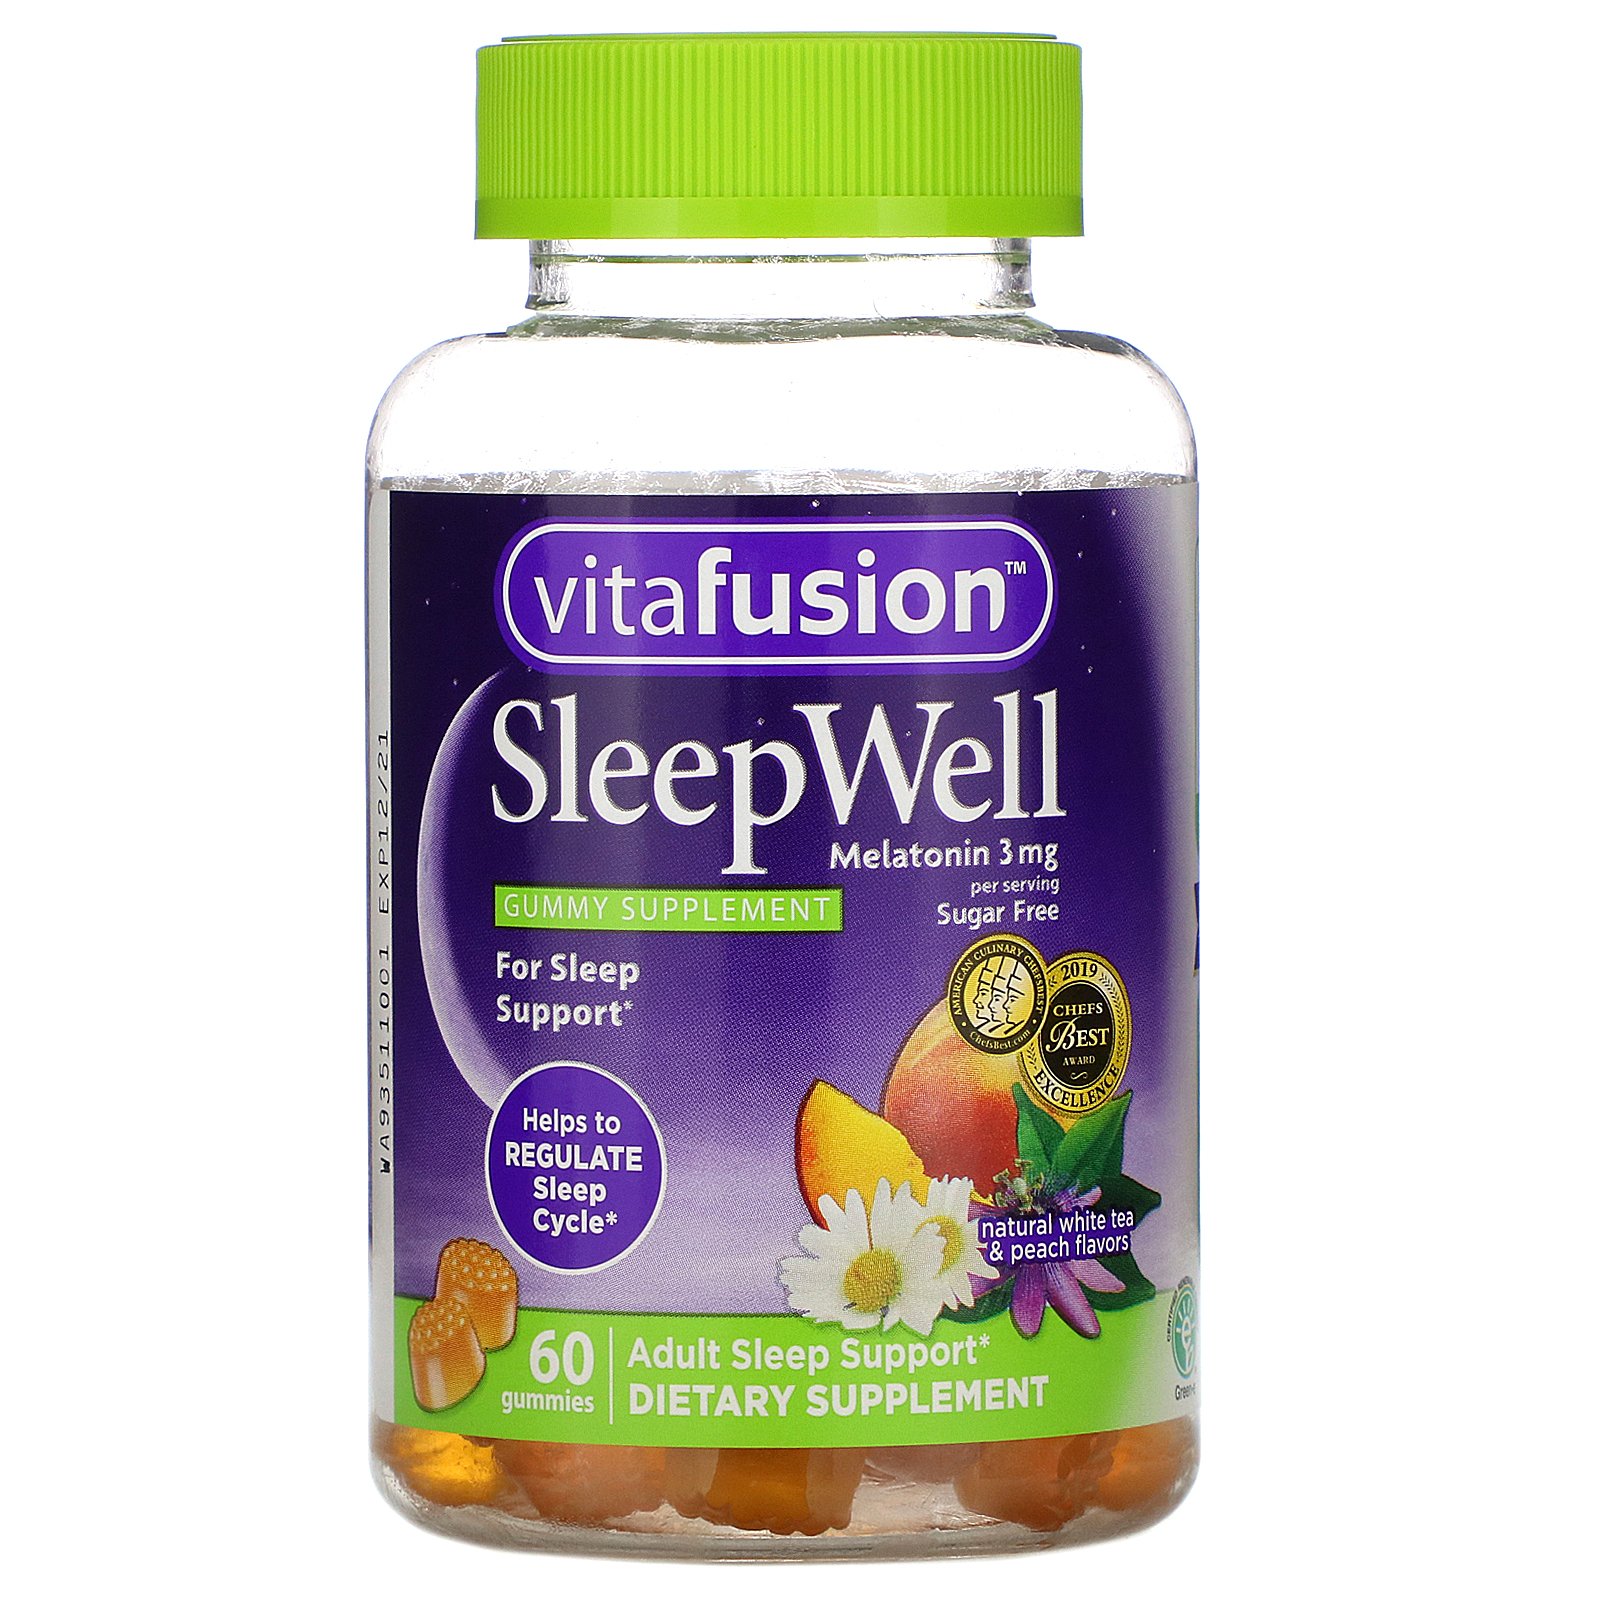 vitaFusion SleepWell melatonin gummis